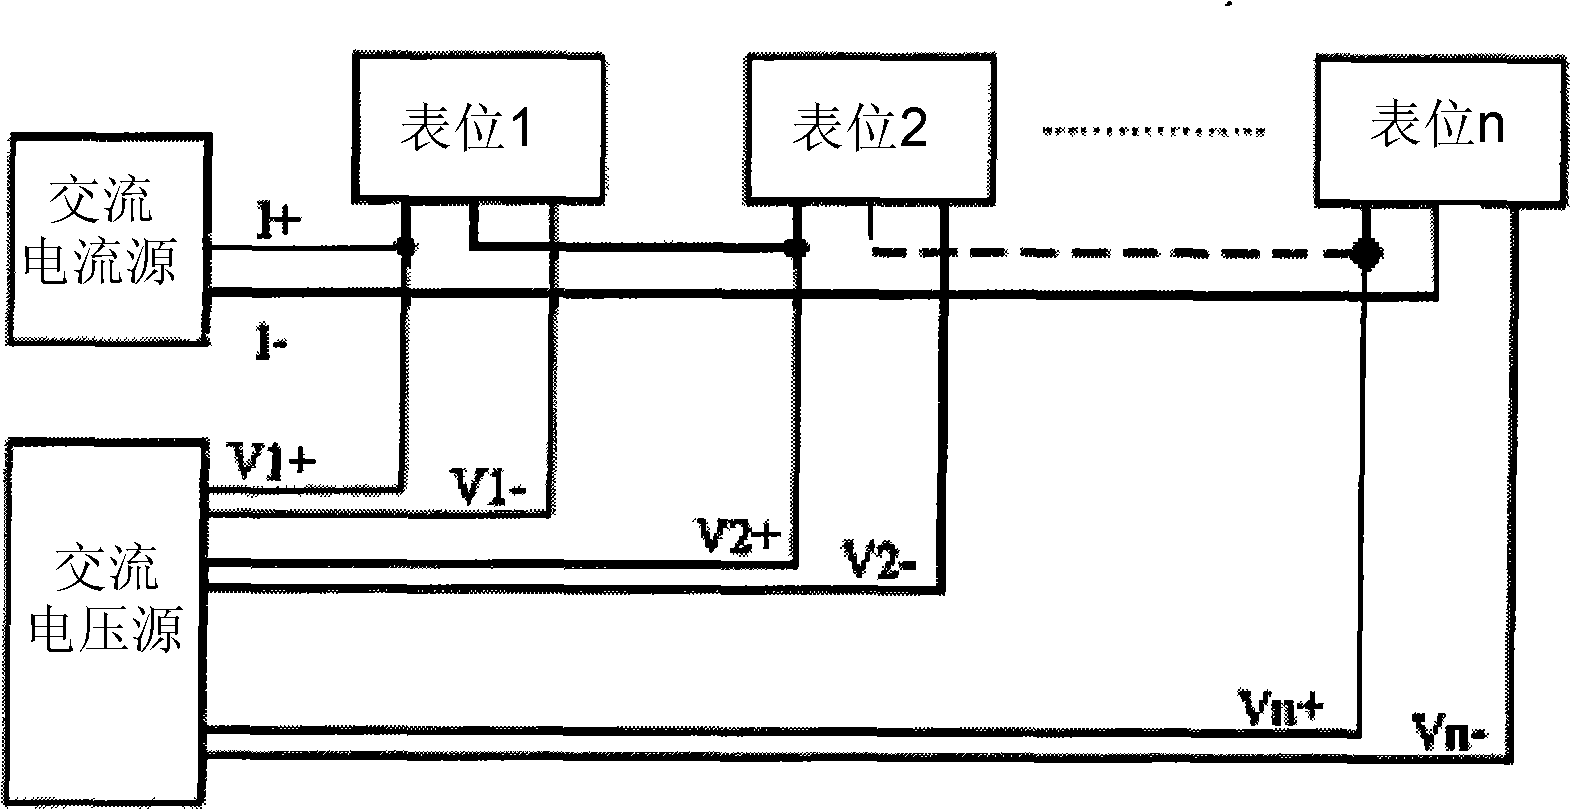 AC line short circuit protection arrangement and detecting method